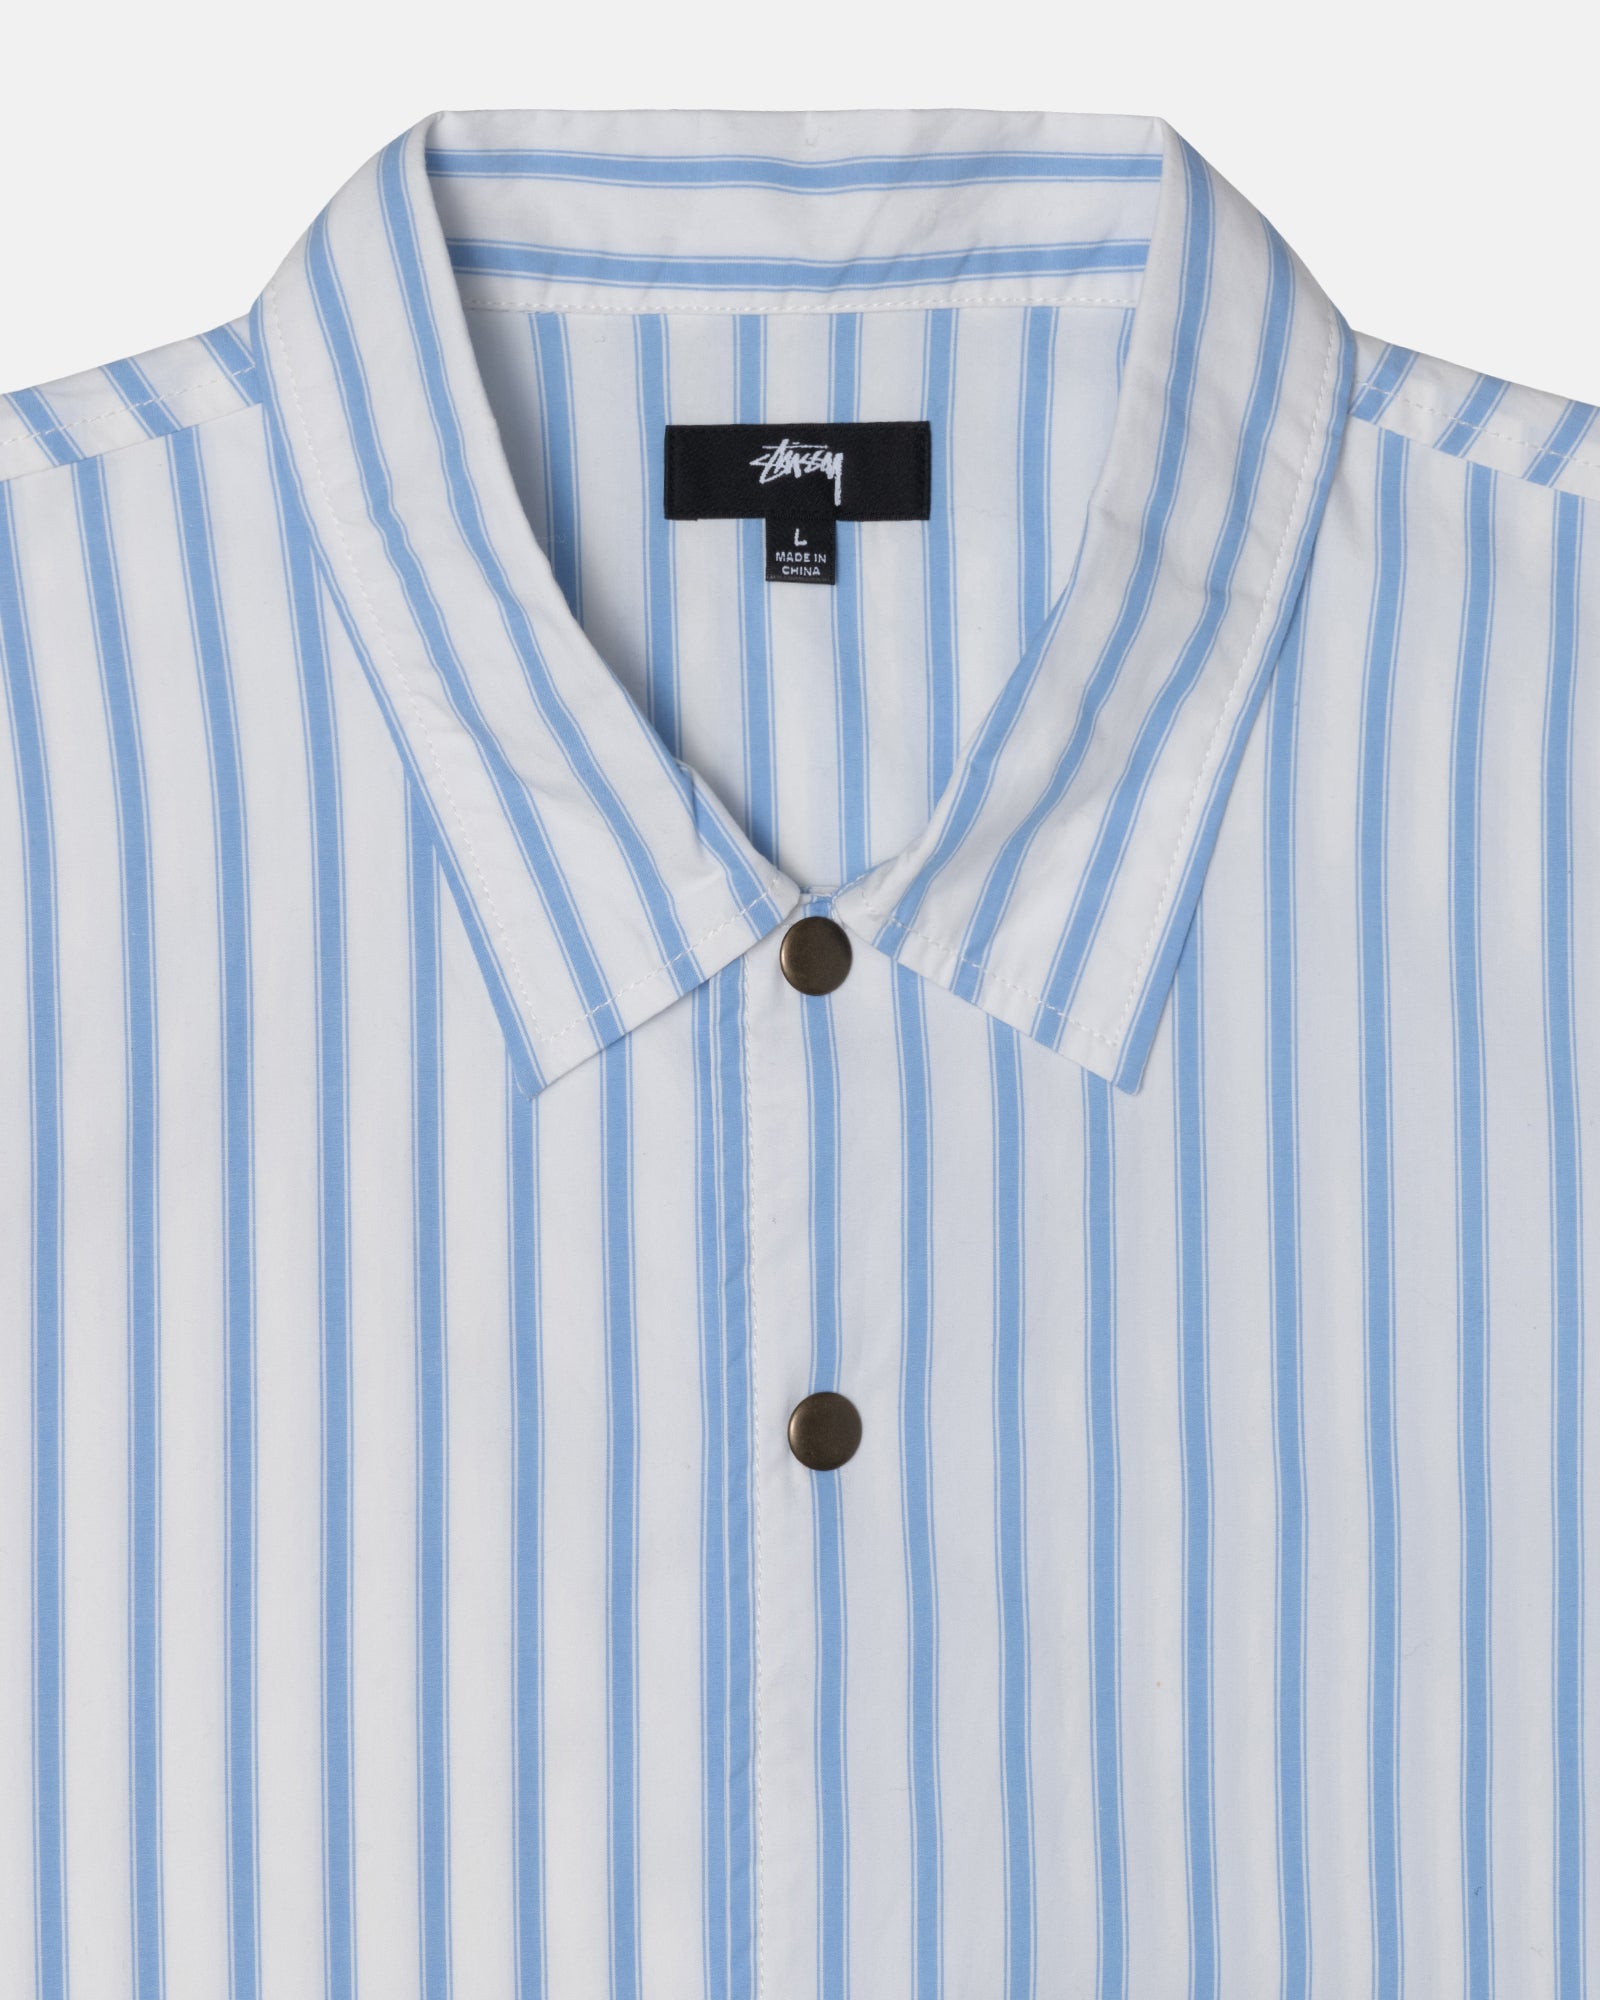 Coach Shirt - Unisex Tops & Shirts | Stüssy